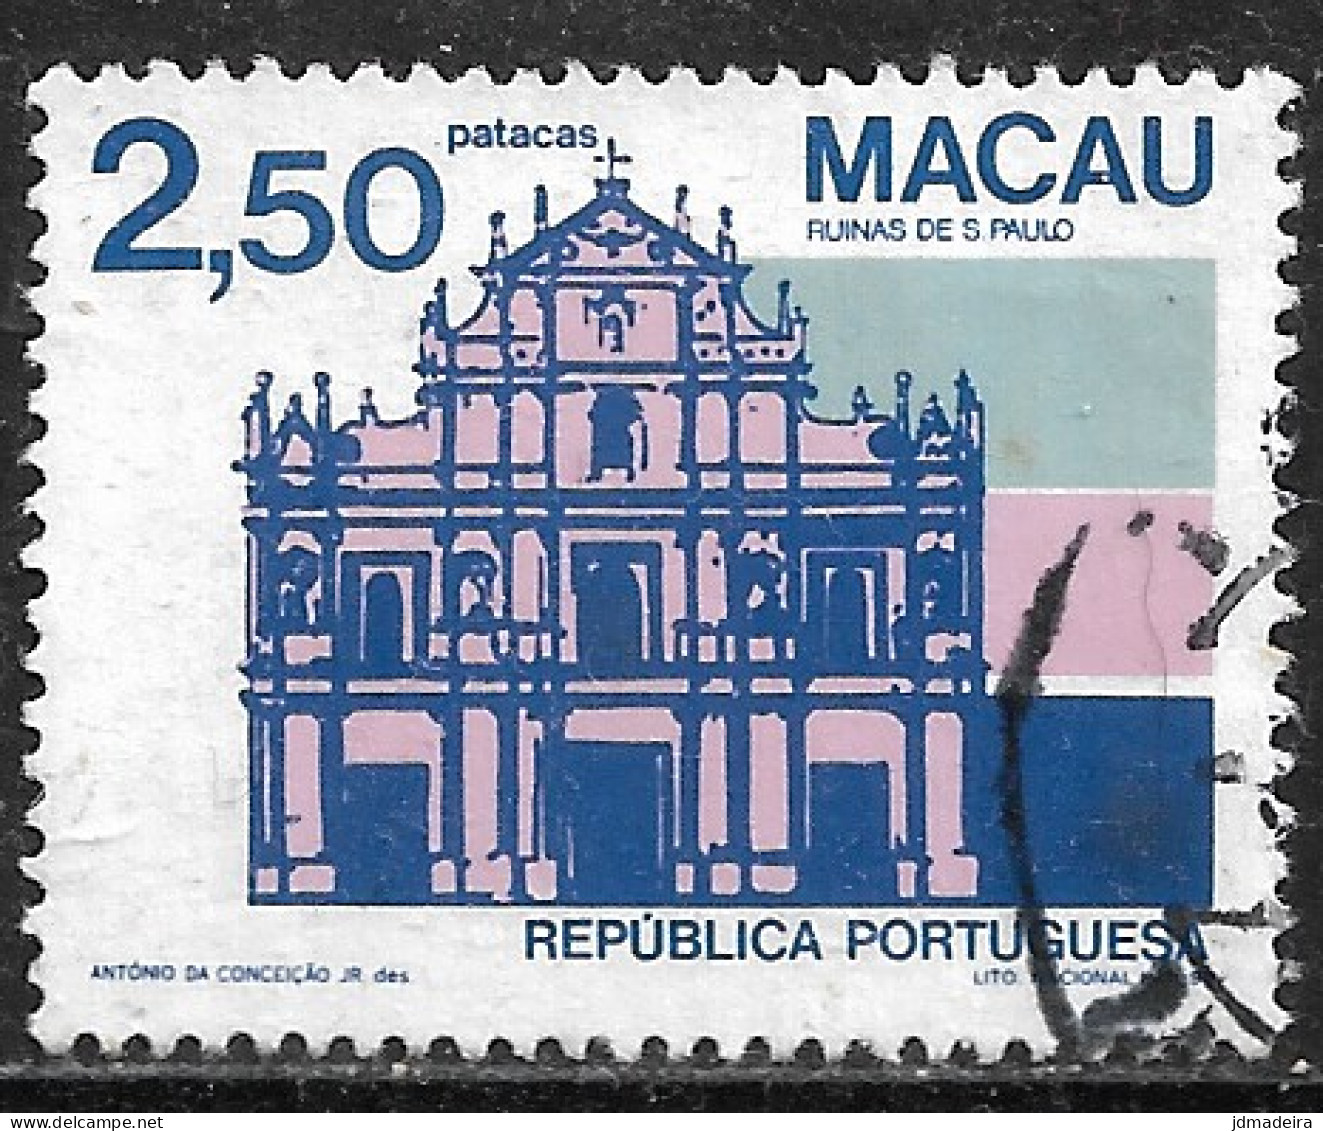 Macau Macao – 1983 Public Buildings 2,50 Pacatas Scarce Variety Used Stamp - Used Stamps